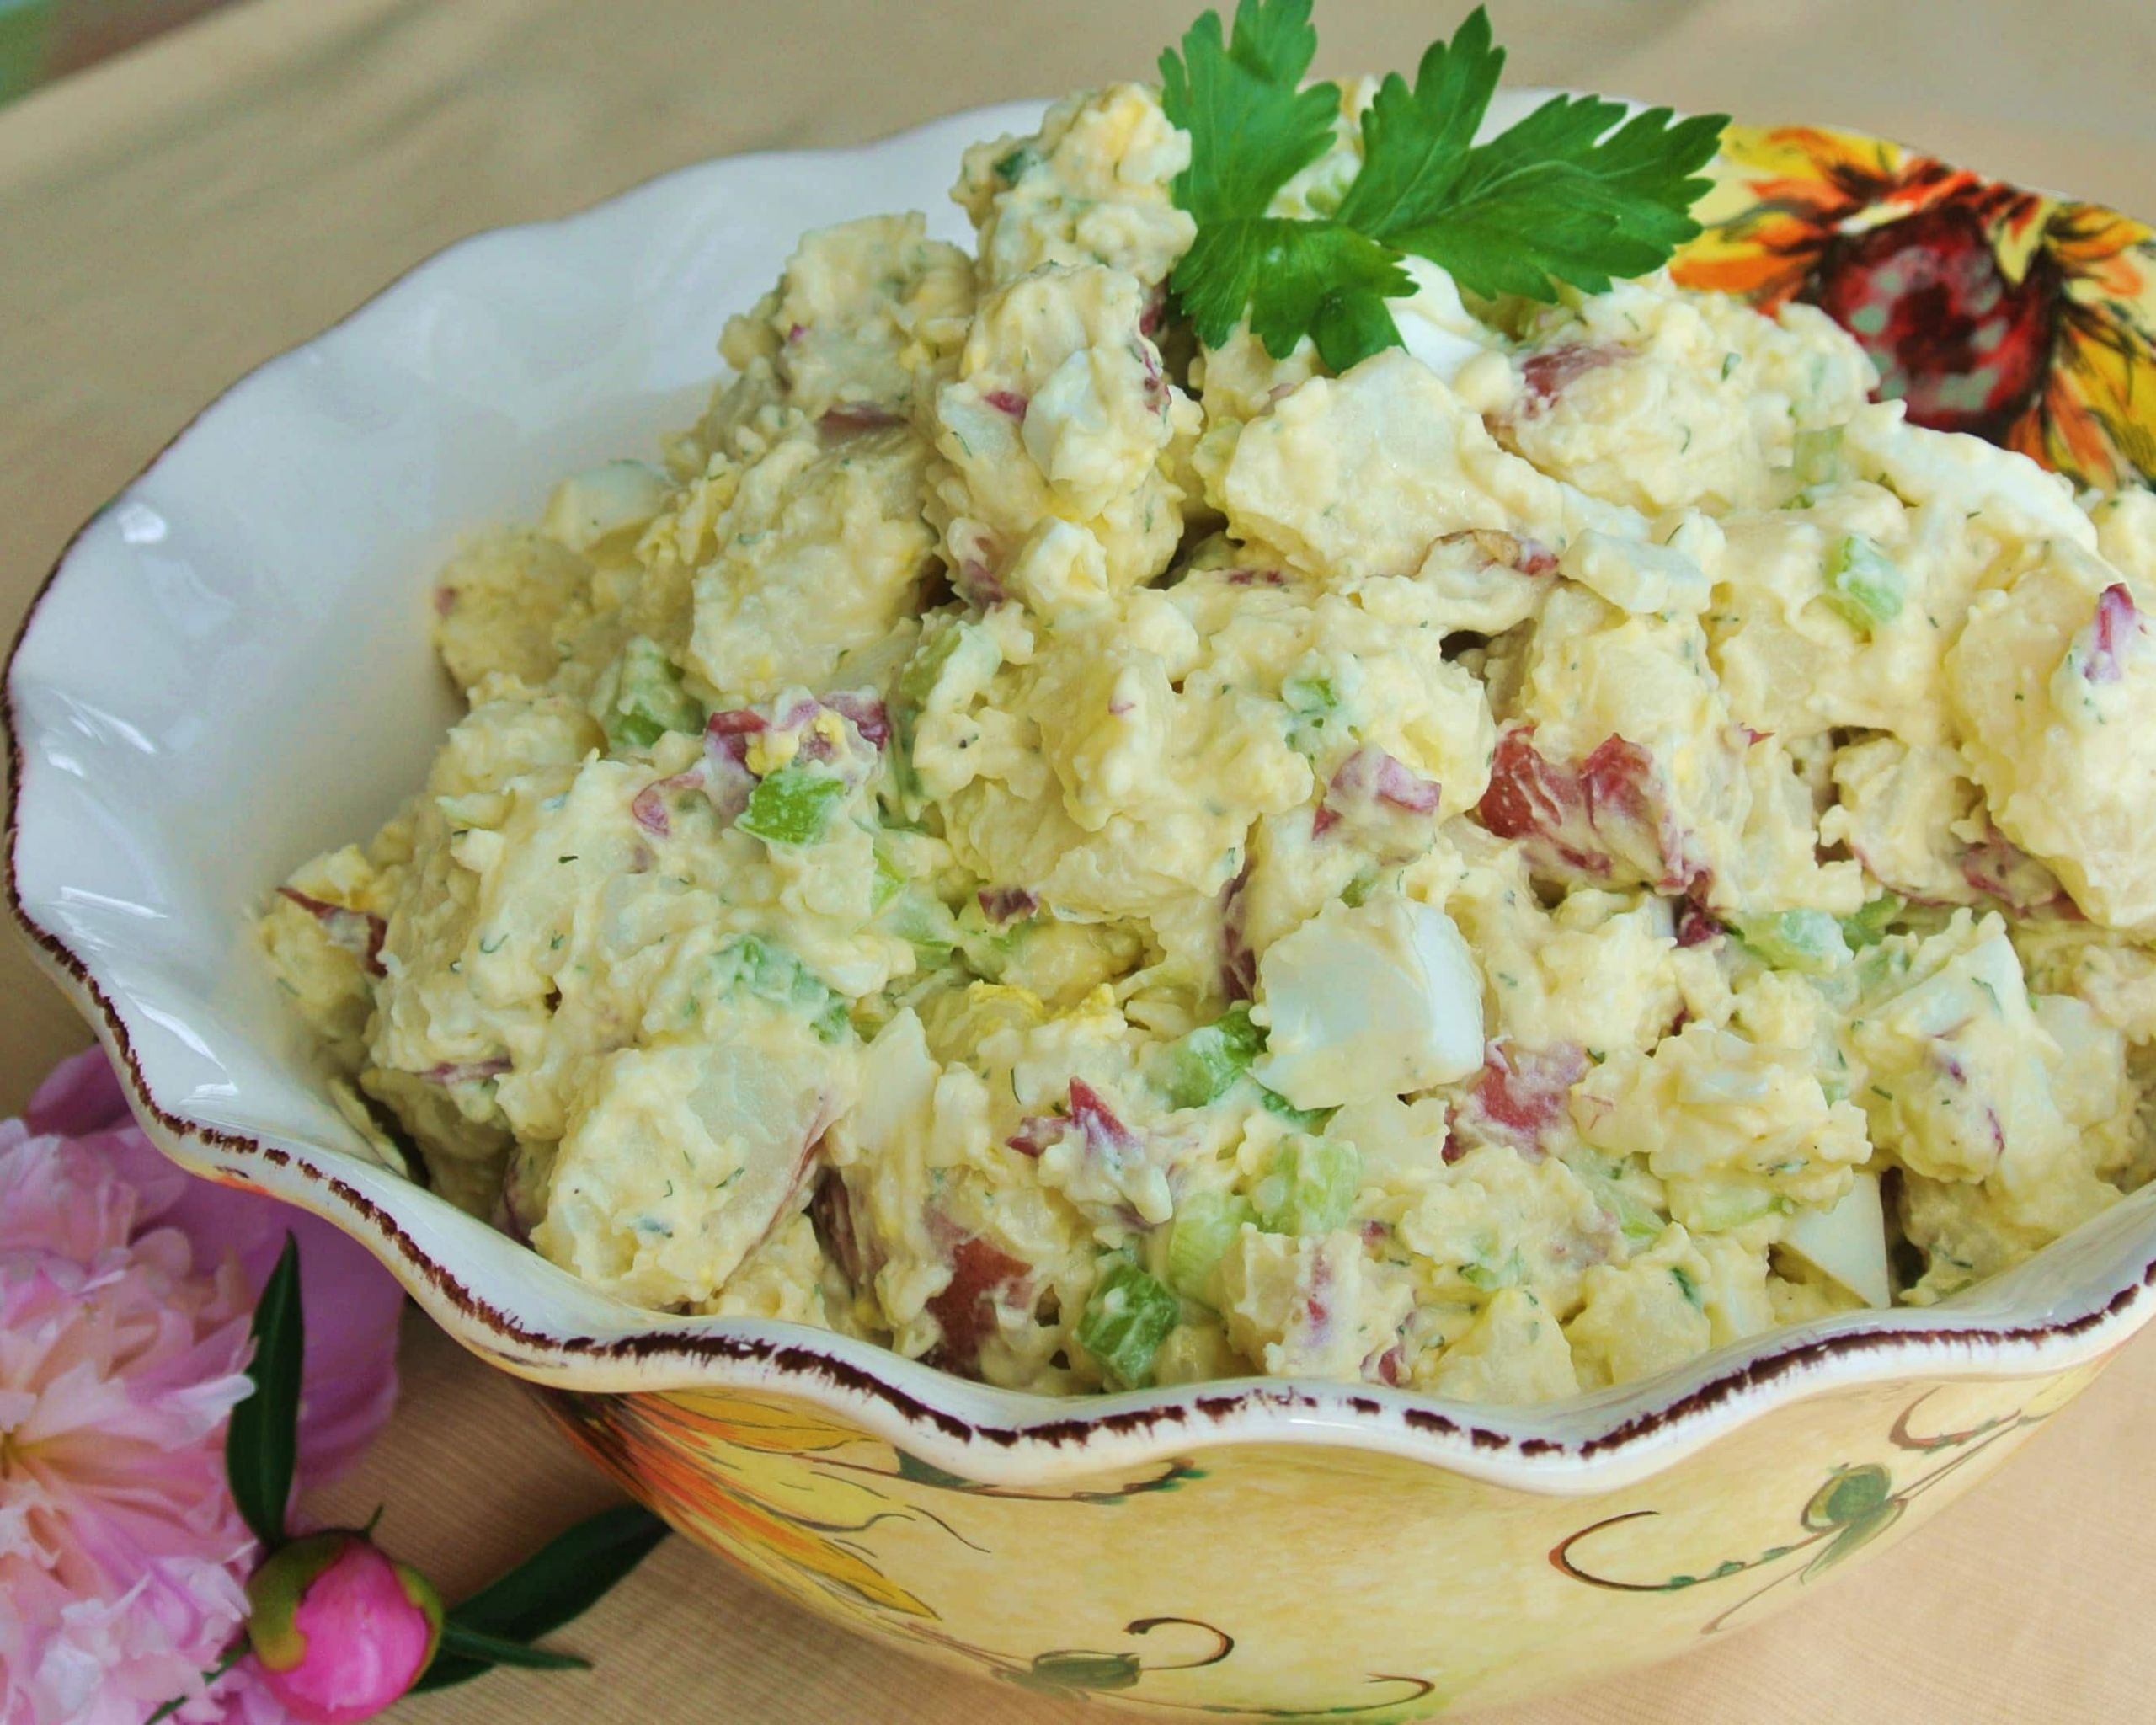 Redskin Potato Salad
 The Best Creamy Dill Red Skin Potato Salad No Plate Like